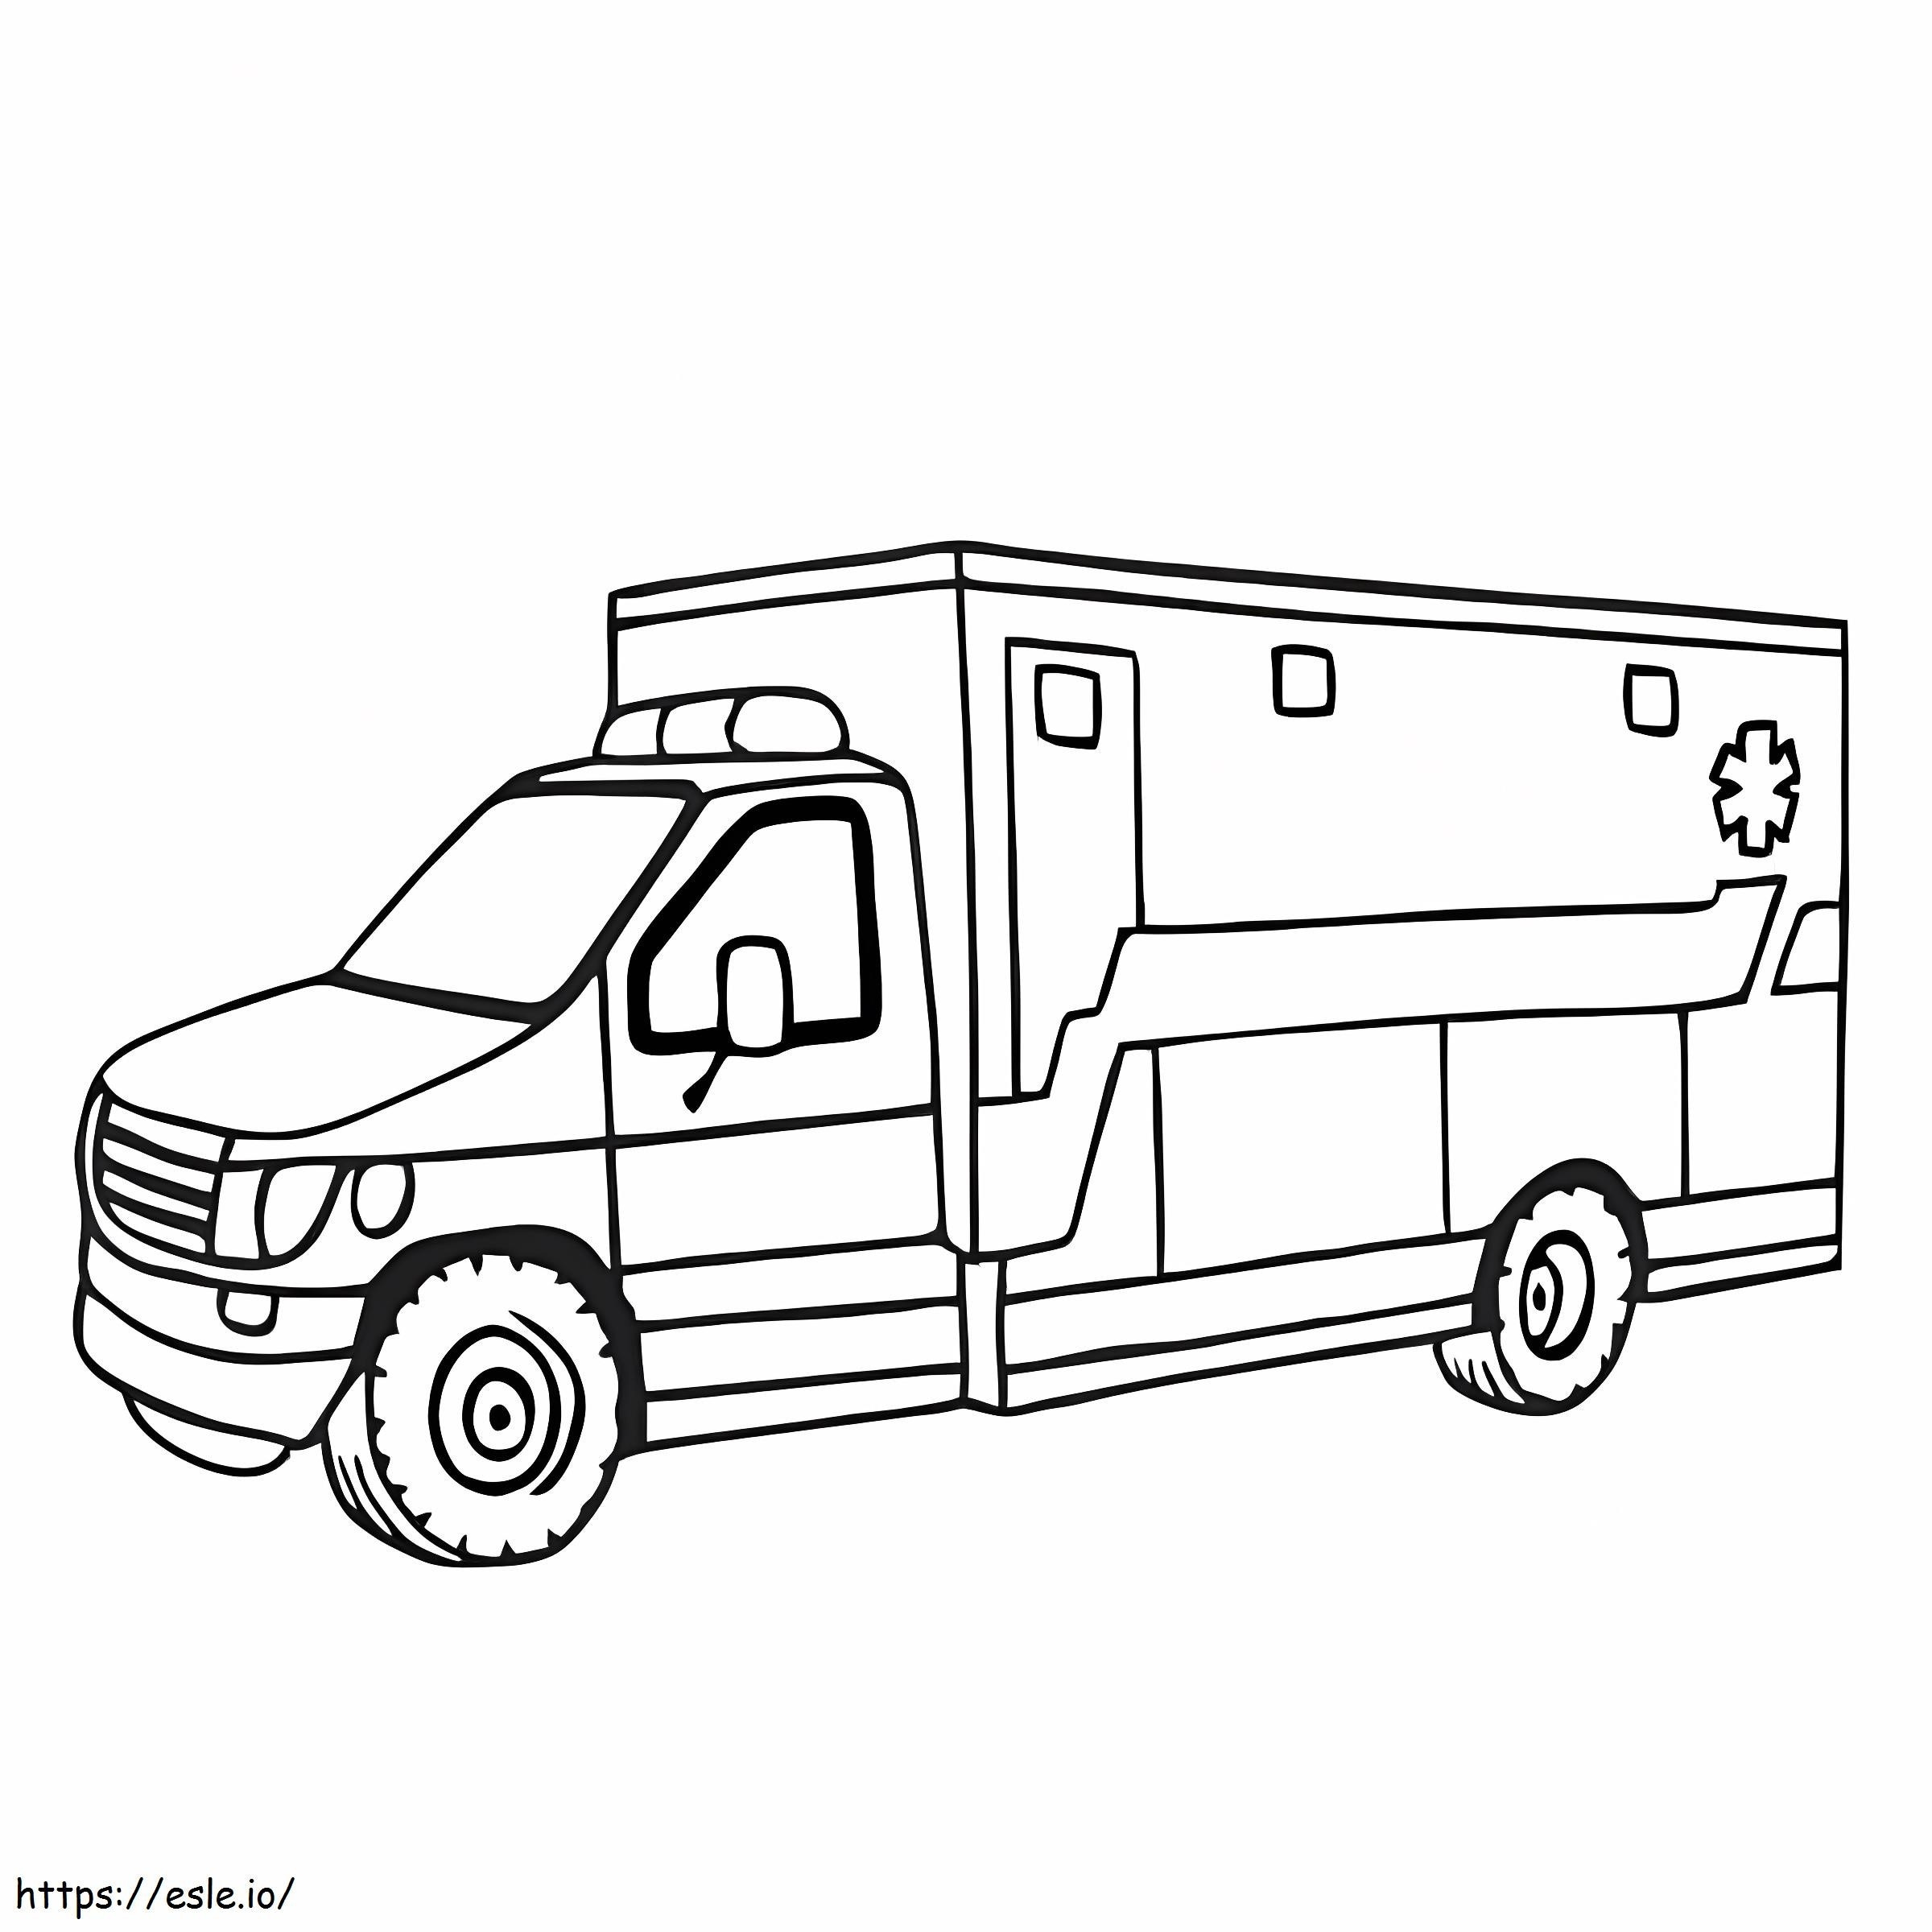 Awesome Ambulance coloring page